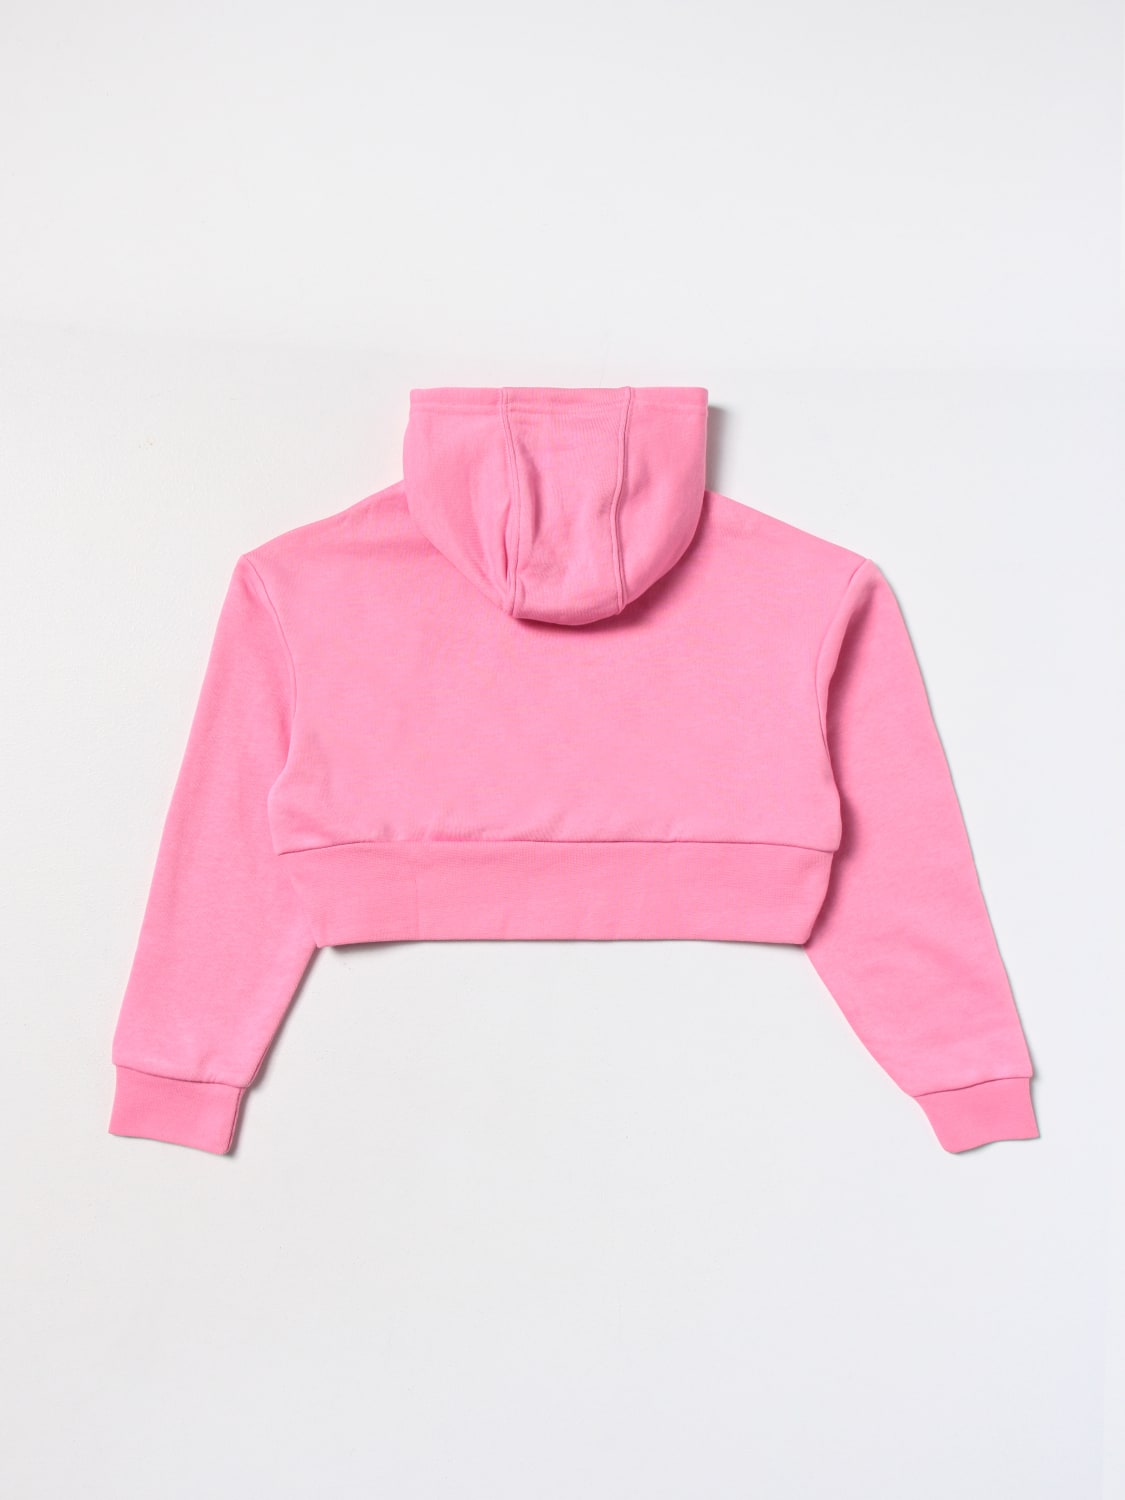 wiel rietje pols ADIDAS ORIGINALS: sweater for girls - Pink | Adidas Originals sweater  IJ9718 online on GIGLIO.COM